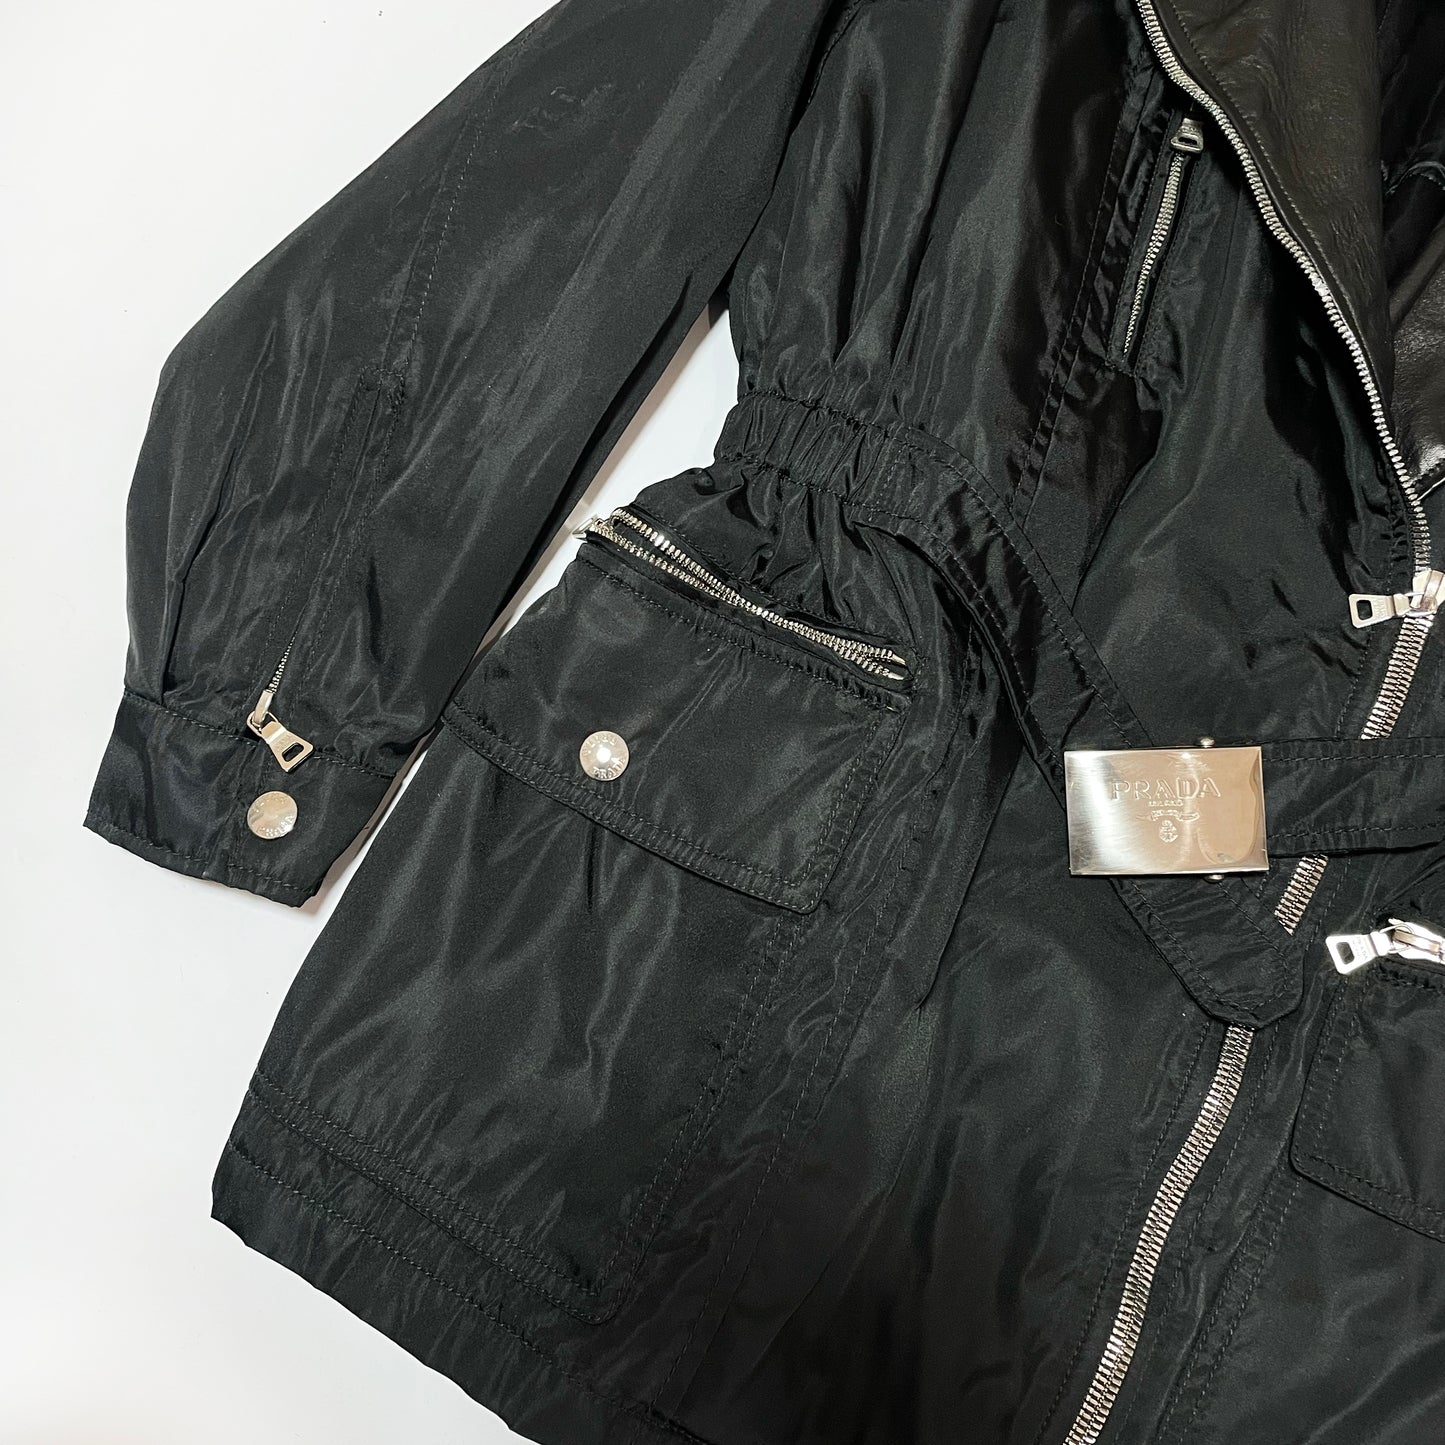 Prada FW1994 Nylon Jacket with Fur Collar